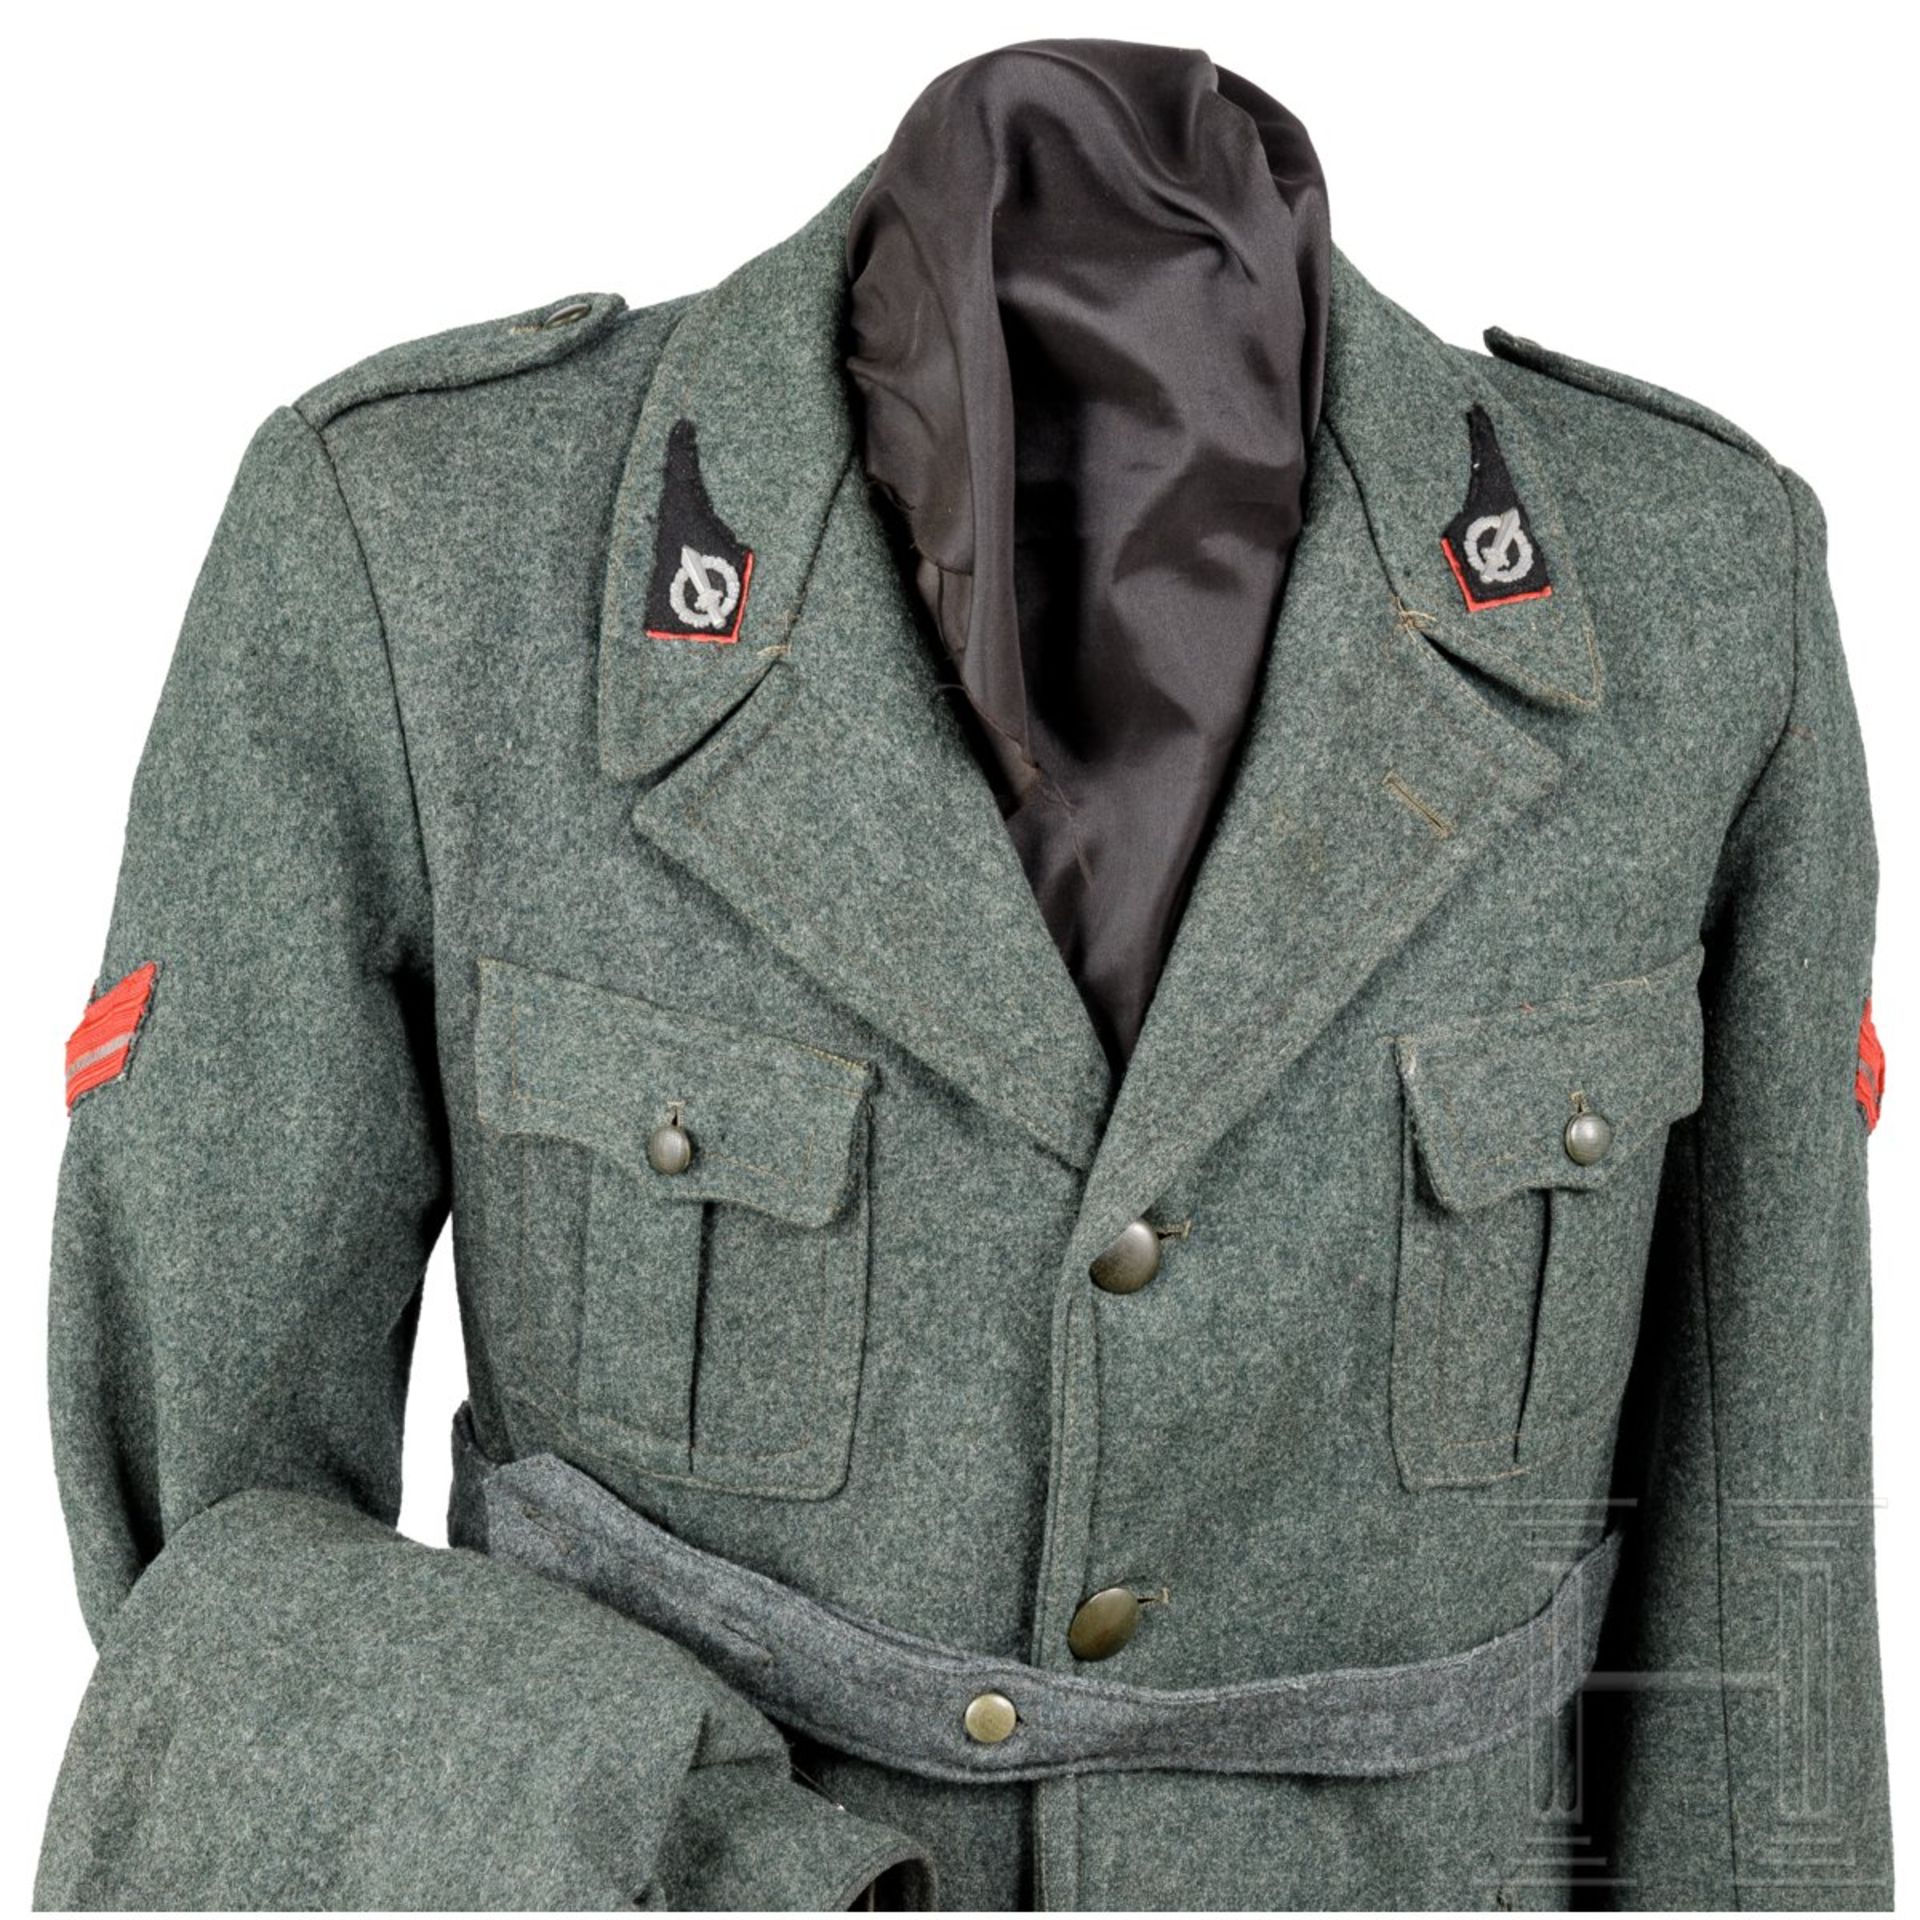 Uniformensemble eines Soldaten der Repubblica Sociale Italiana (RSI), 1943-45 - Bild 6 aus 12